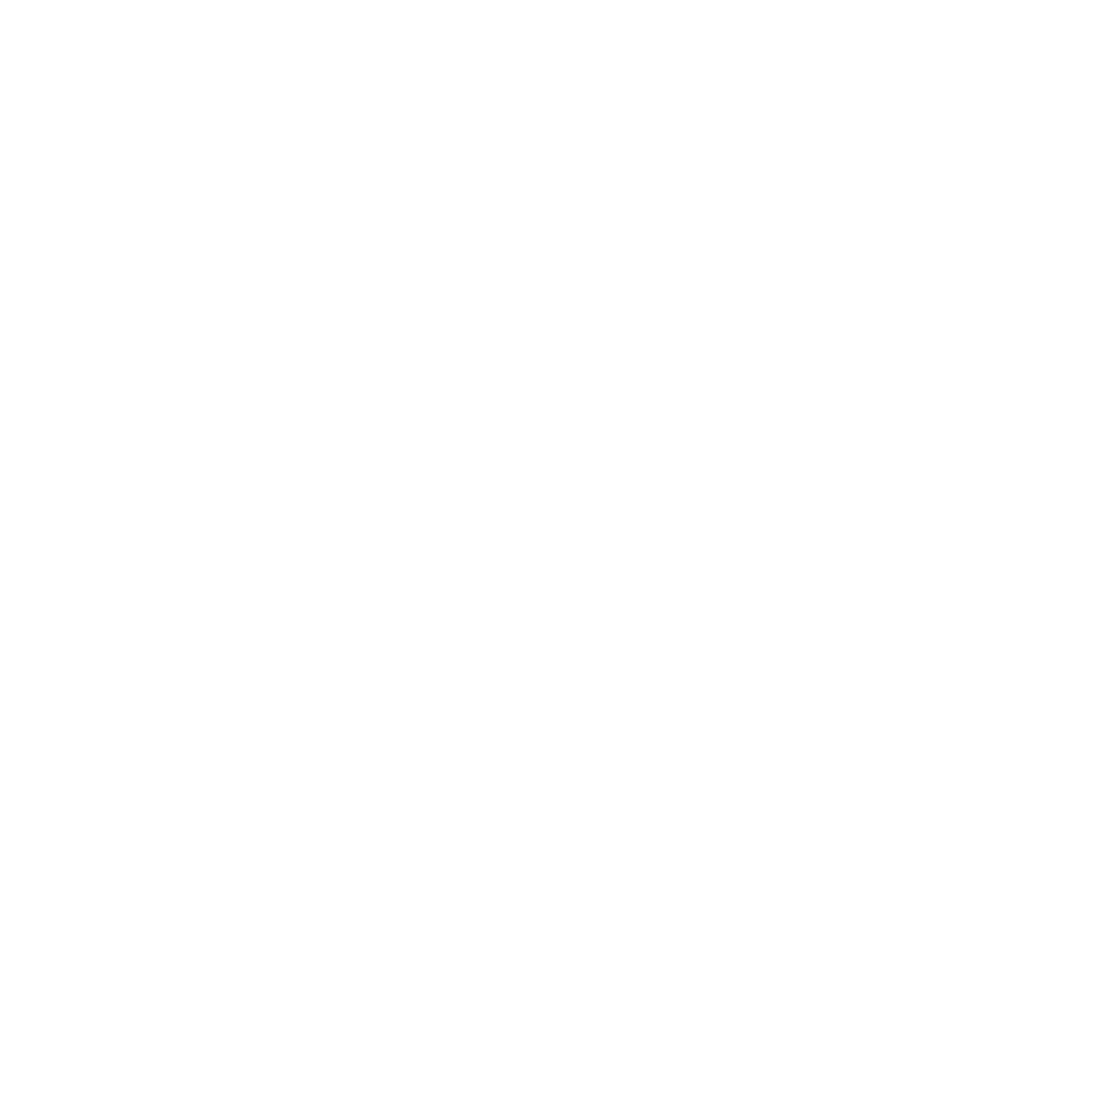 K-Loungeの姉妹店ロゴ7